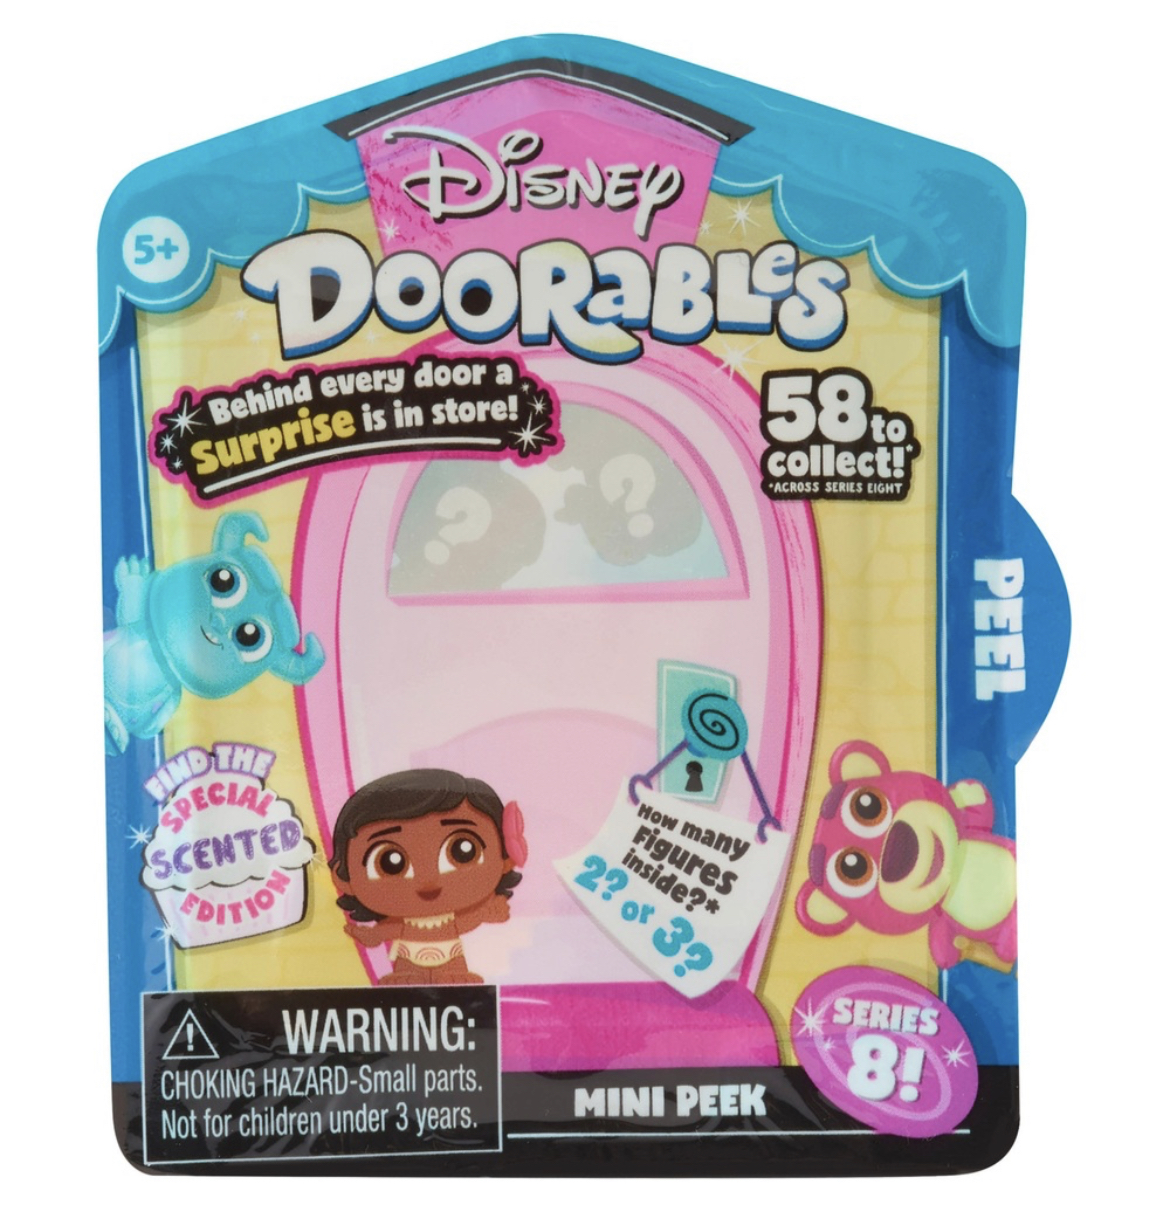 Disney Doorables Ultimate Collector’s Case -  Exclusive